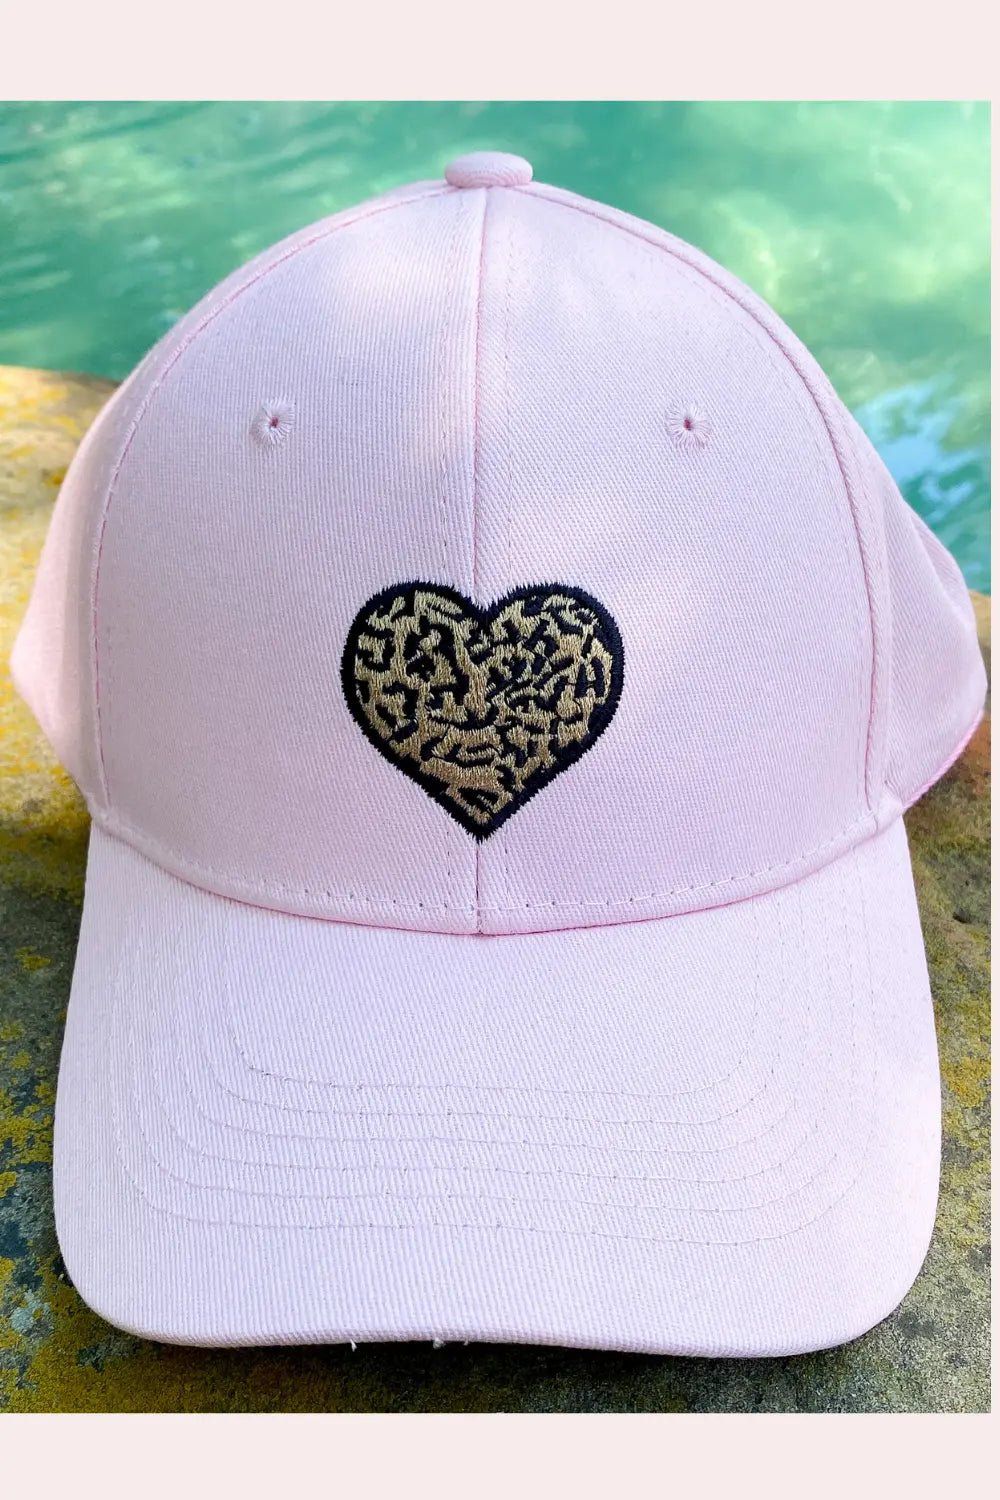 Blush Pink Hat w/ Cheetah Heart